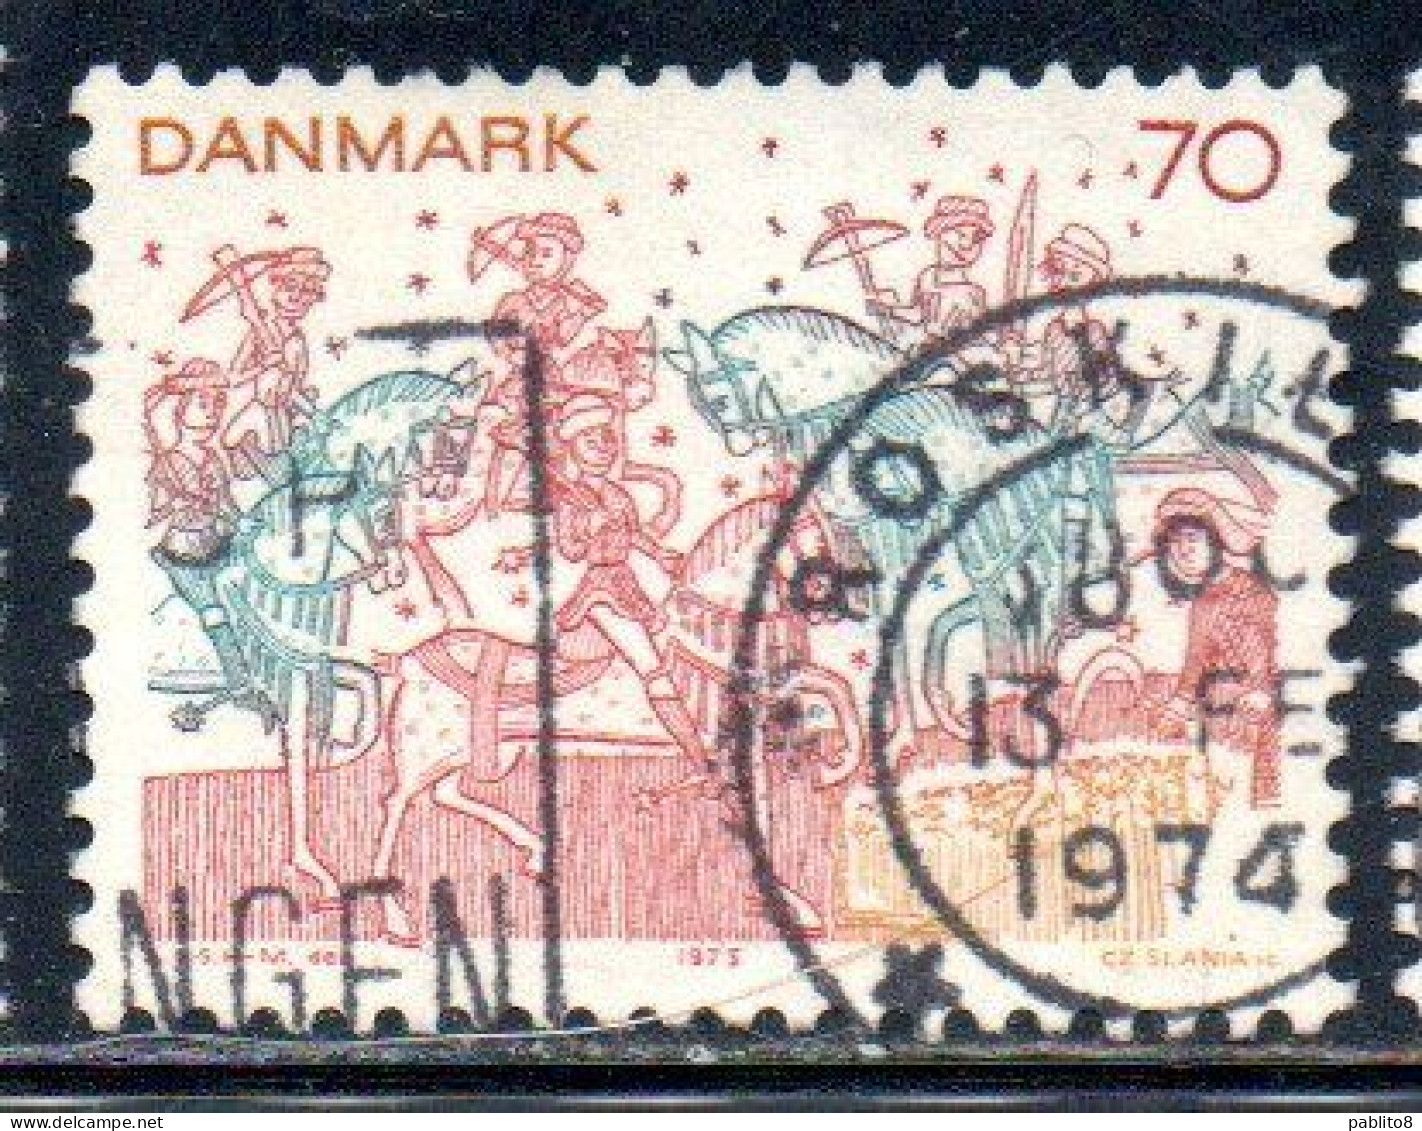 DANEMARK DANMARK DENMARK DANIMARCA 1973 CHRISTMAS NATALE NOEL WEIHNACHTEN NAVIDAD FRESCOES 70o USED USATO OBLITERE' - Used Stamps